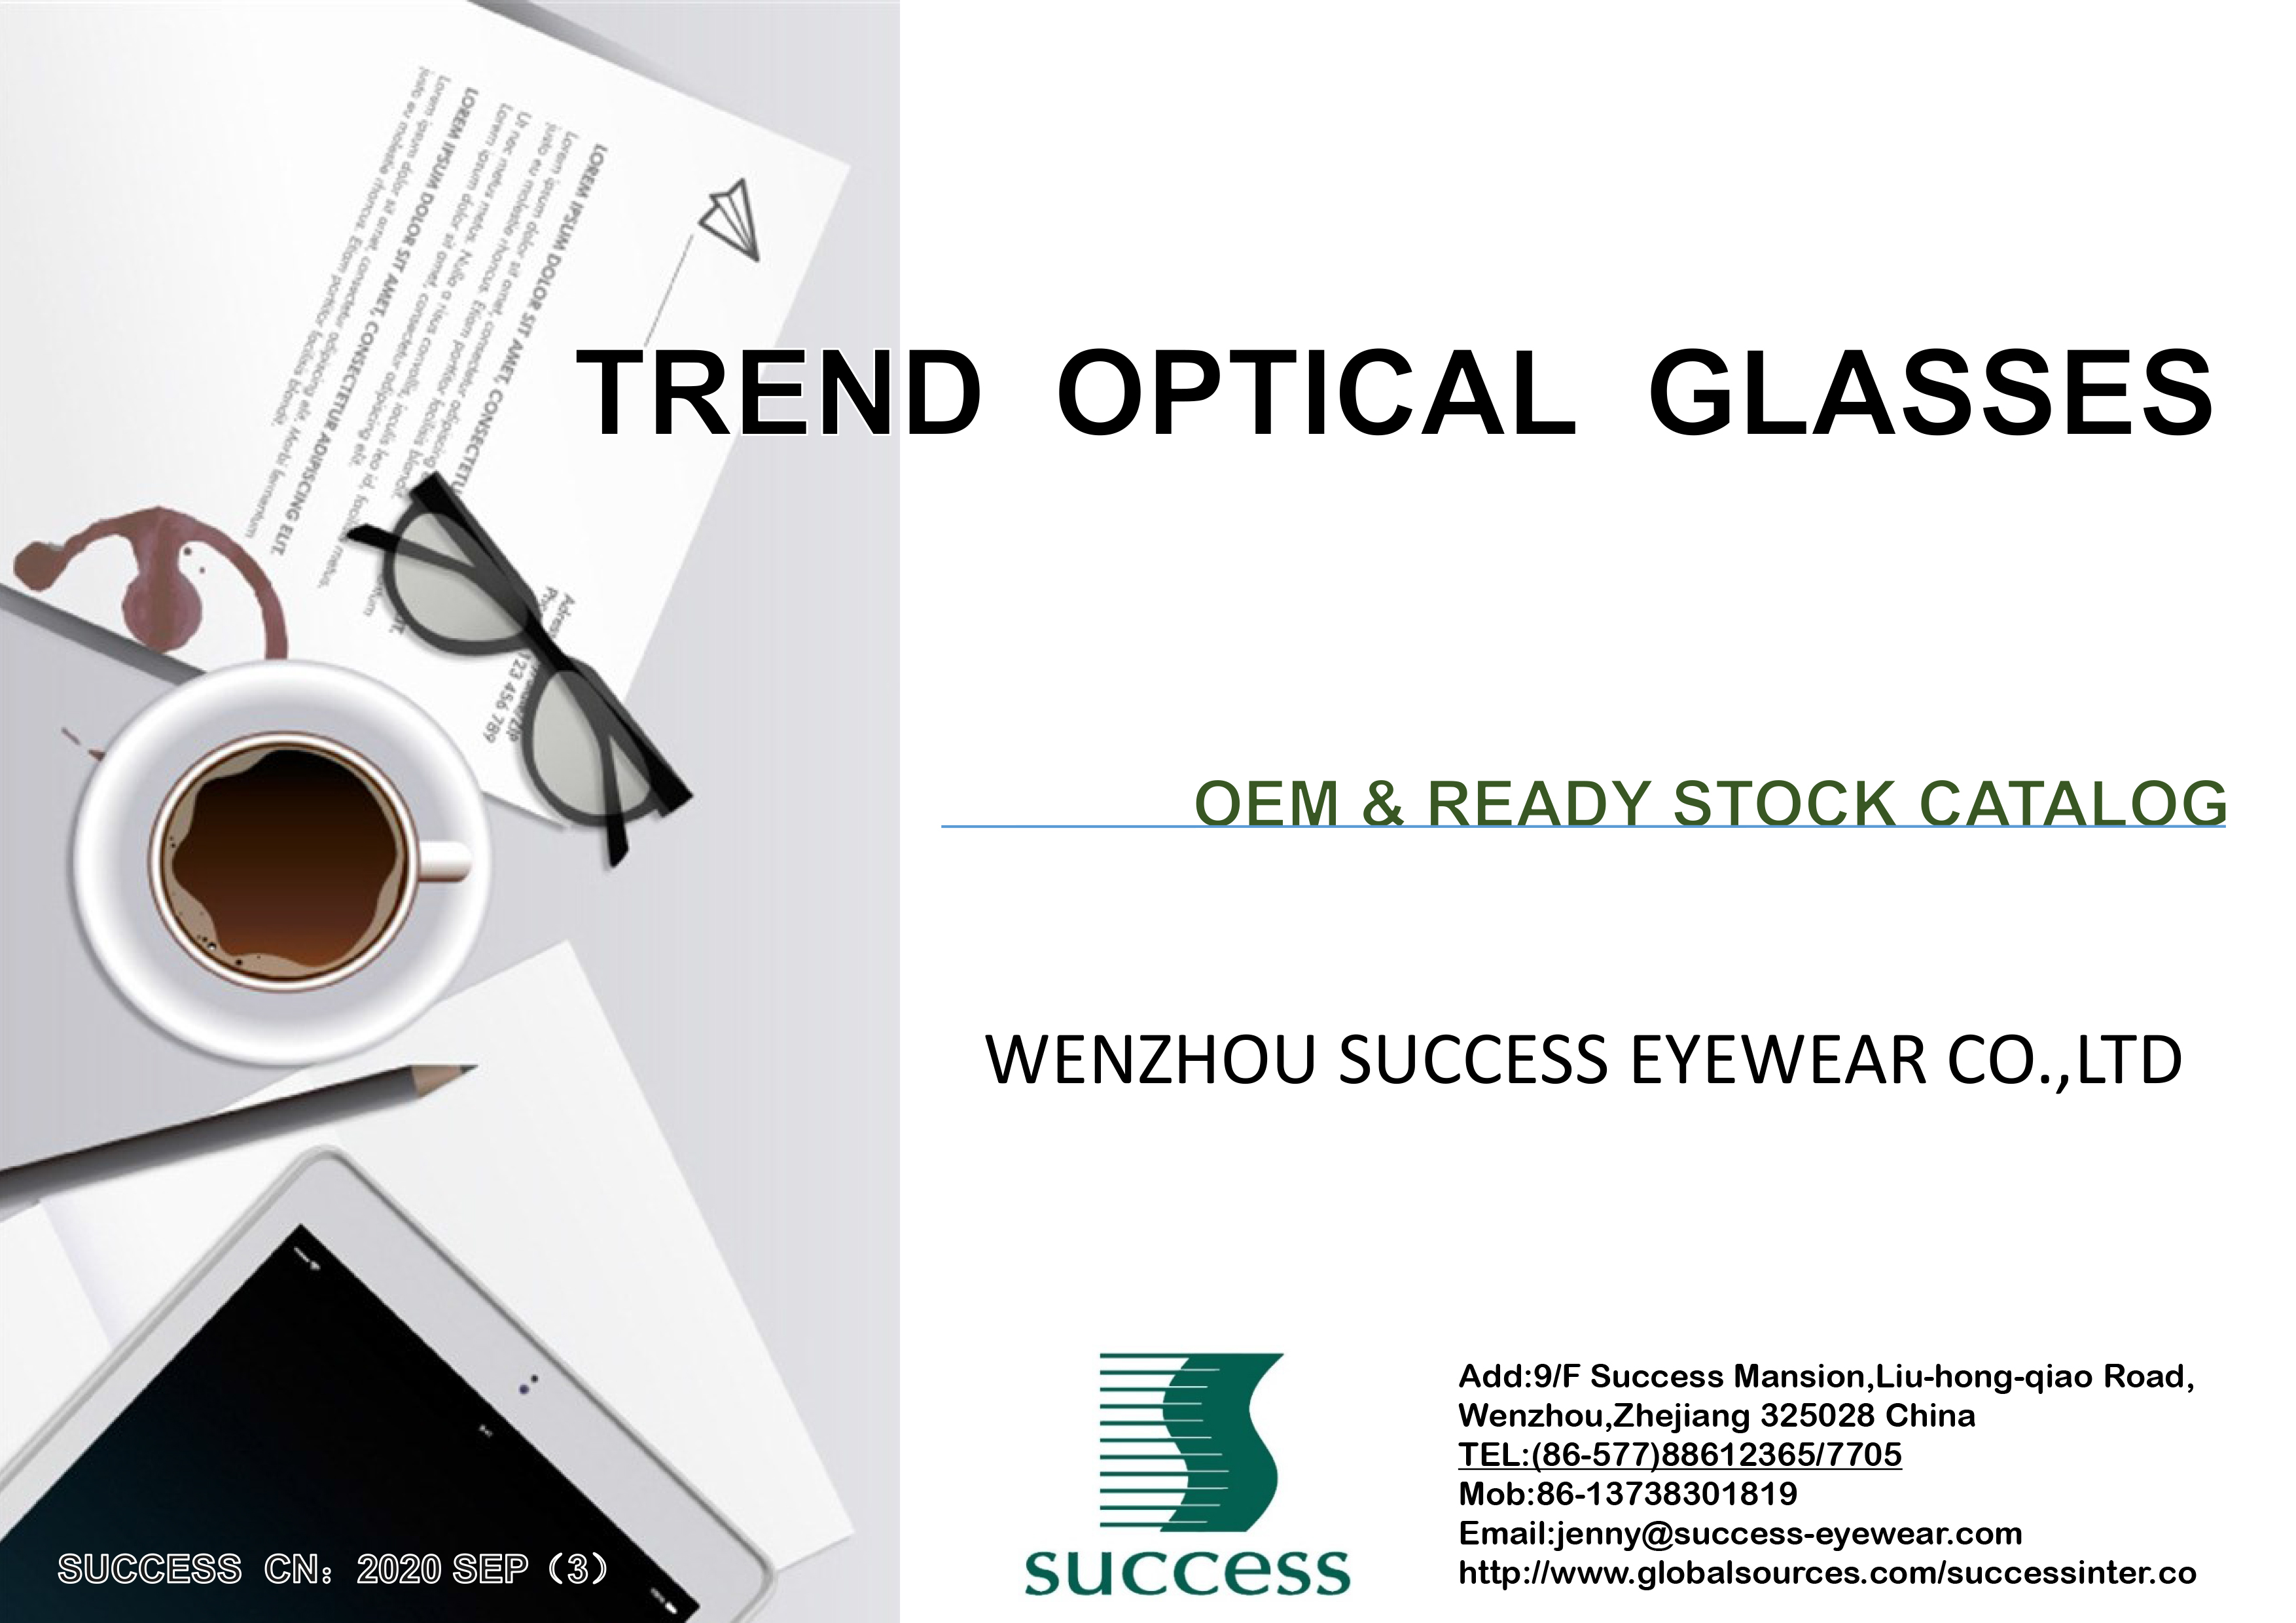 SUCCESS CN 2020 SEPT 3 OEM READY STOCK TREND OPTICAL GLASSES